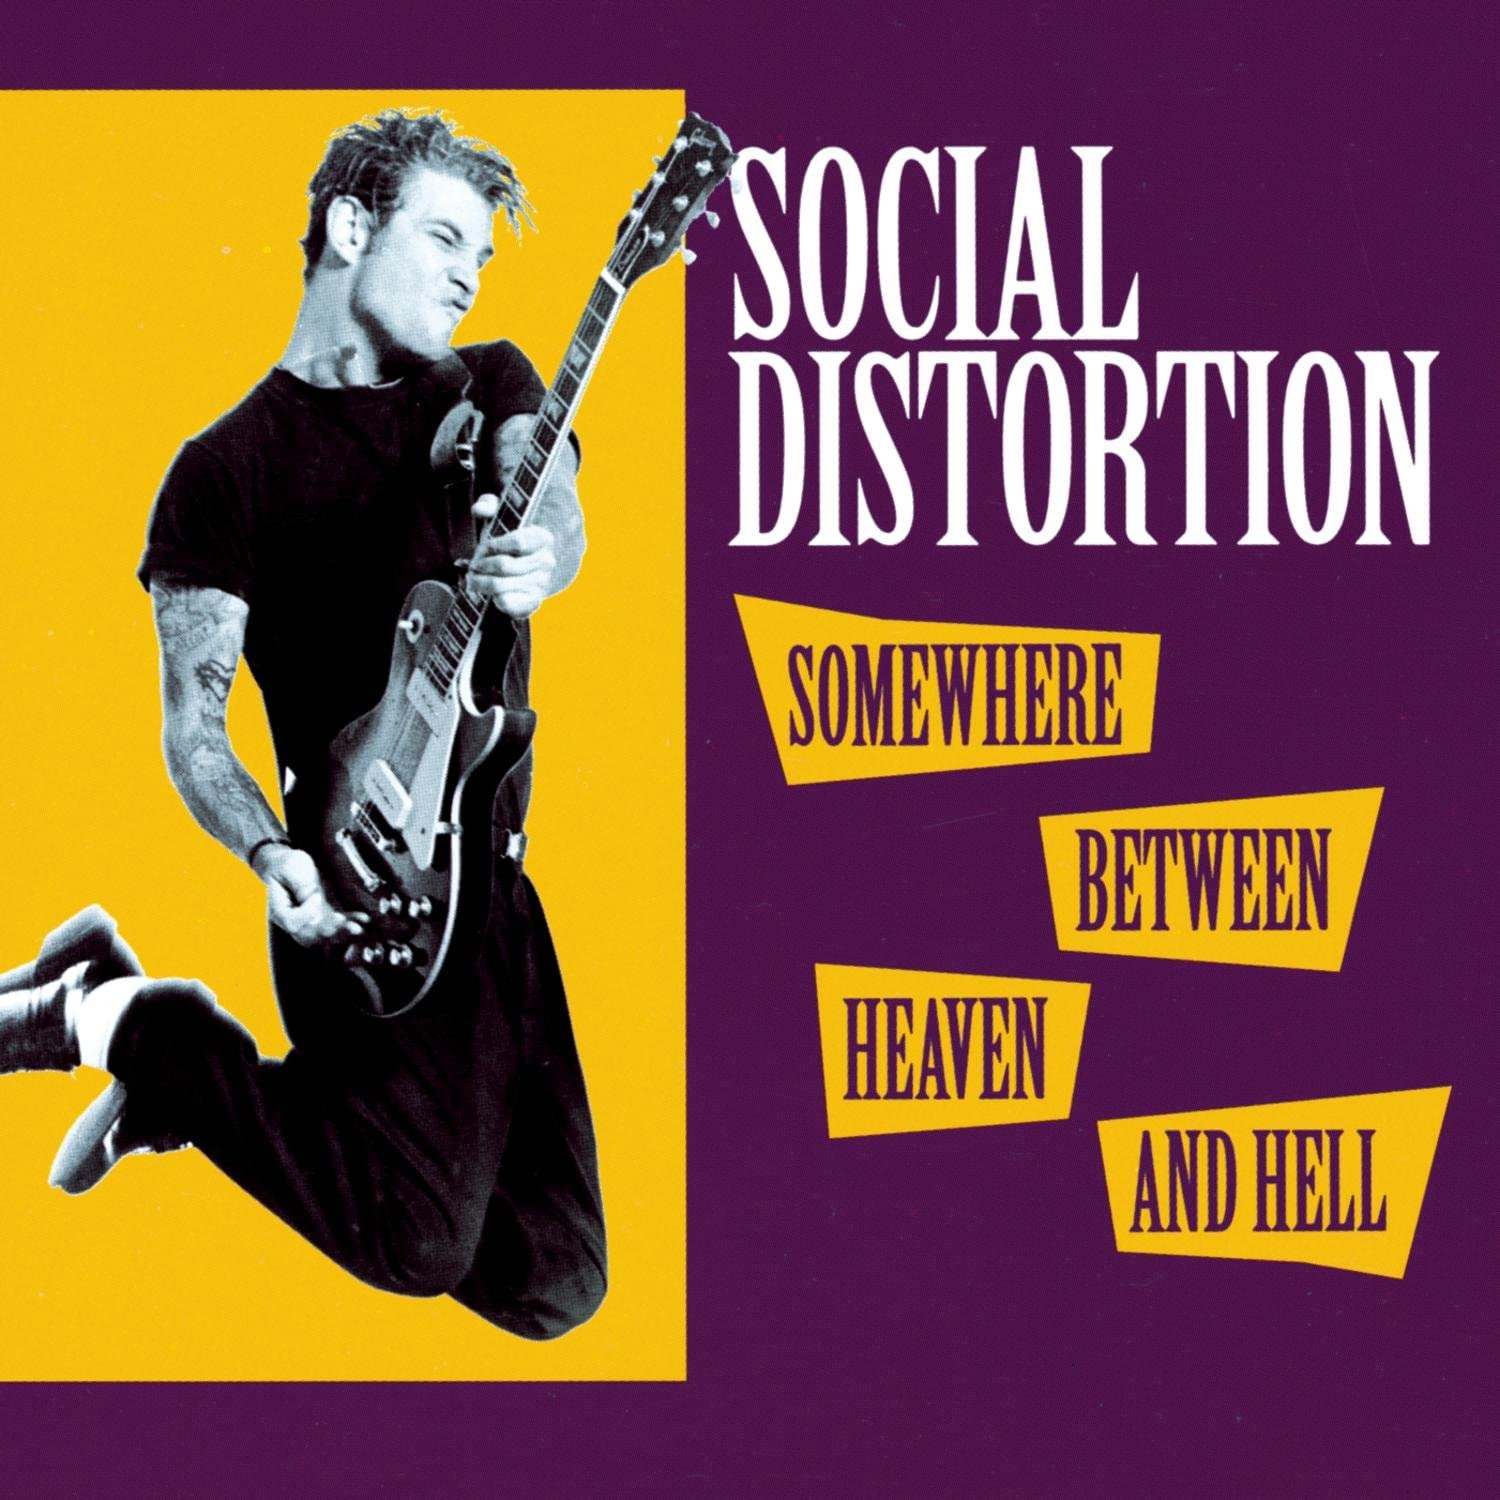 Social Distortion - Somewhere Between Heaven and Hell (Vinyl LP)